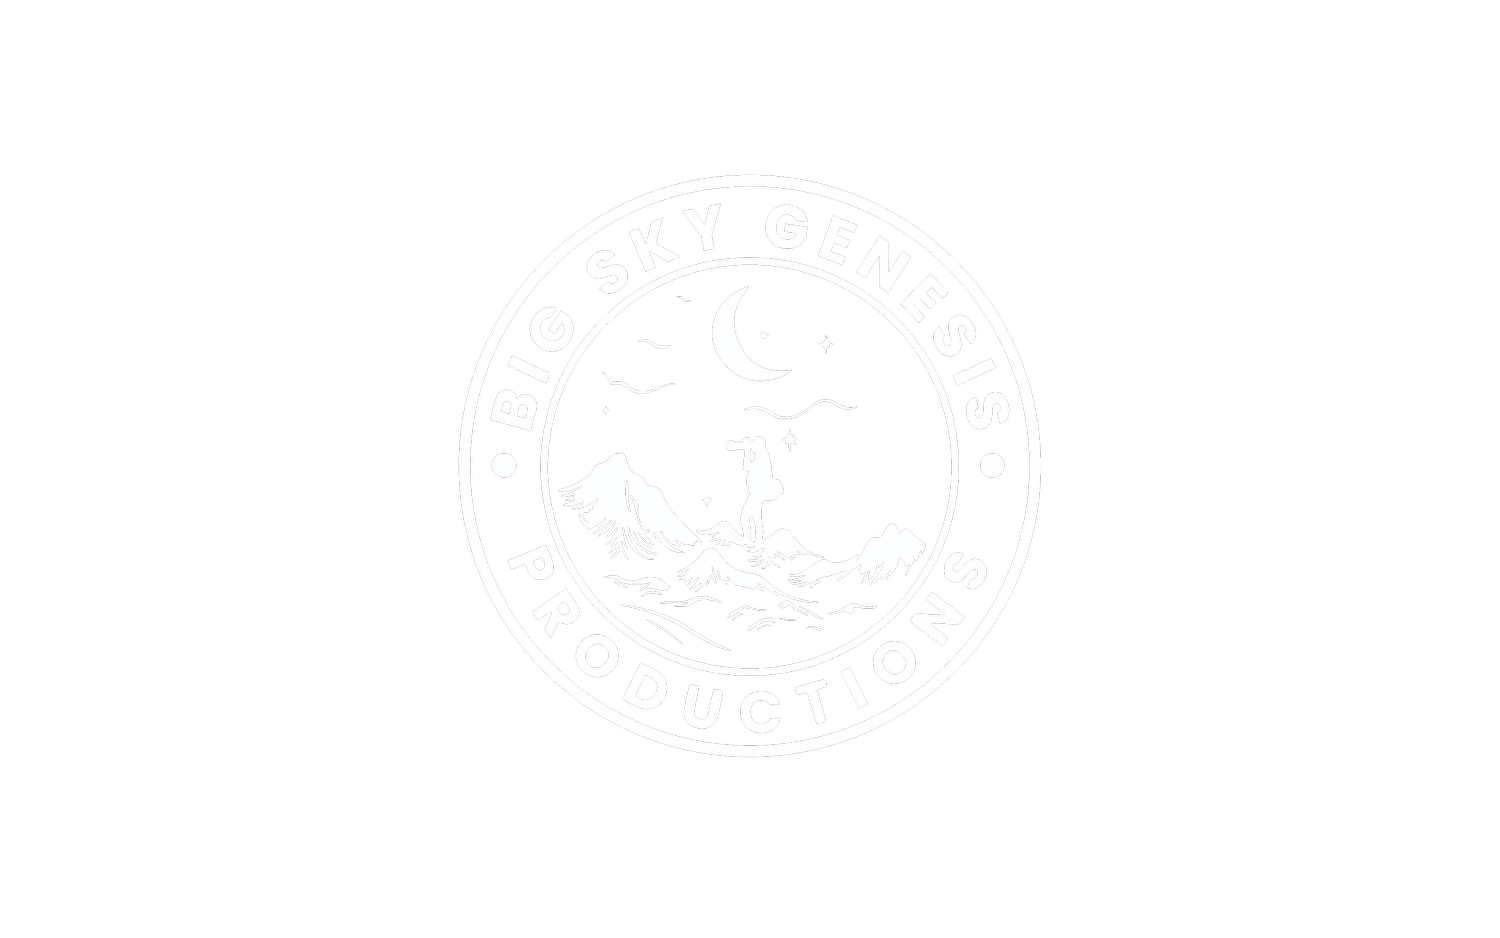 Big Sky Genesis Productions